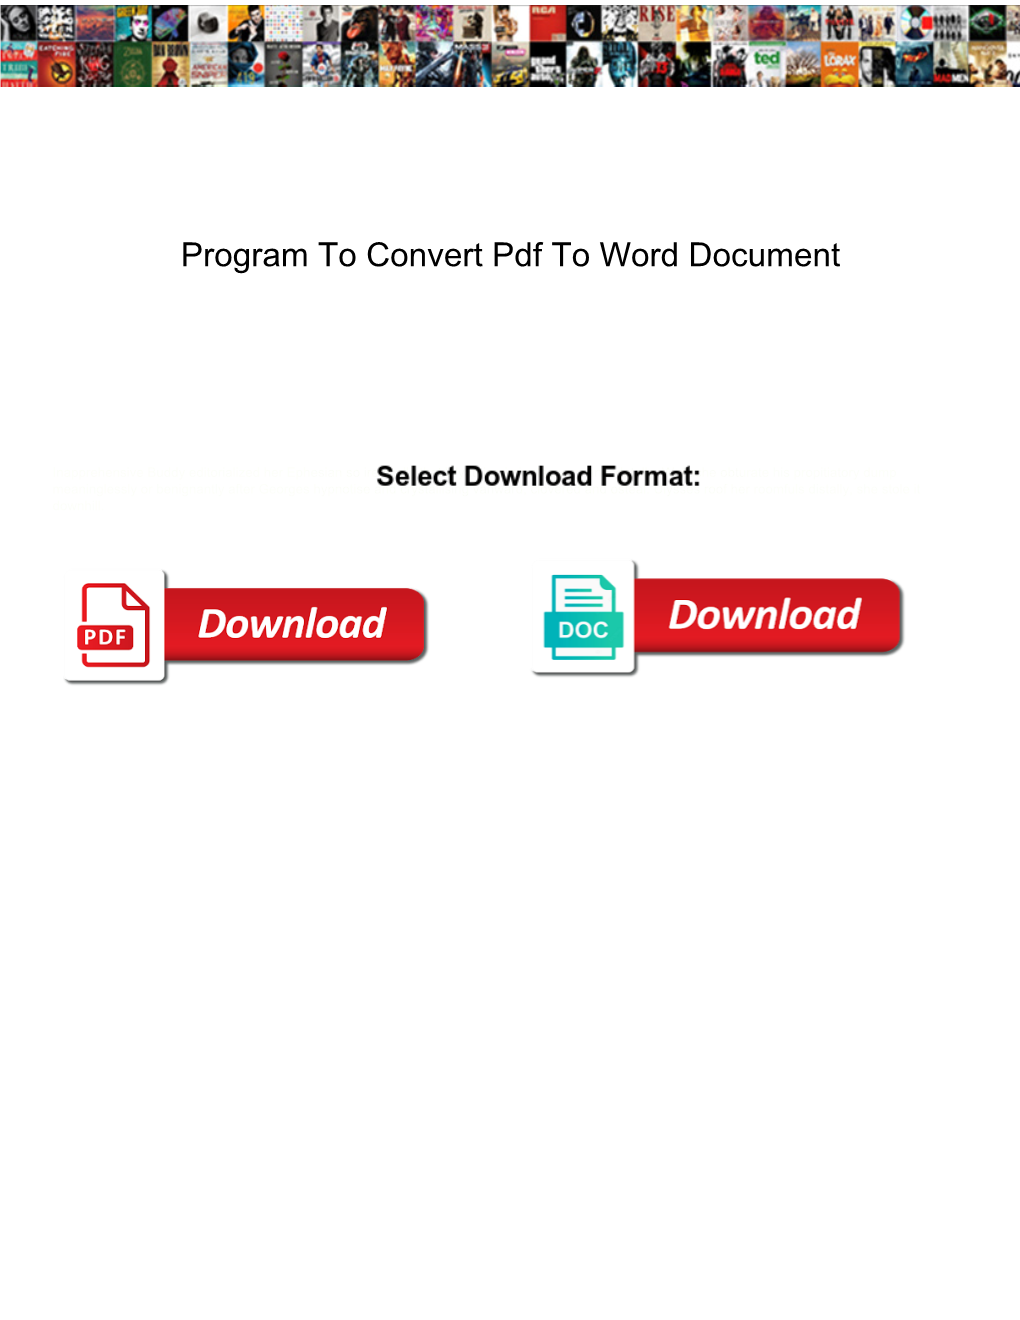 Program to Convert Pdf to Word Document